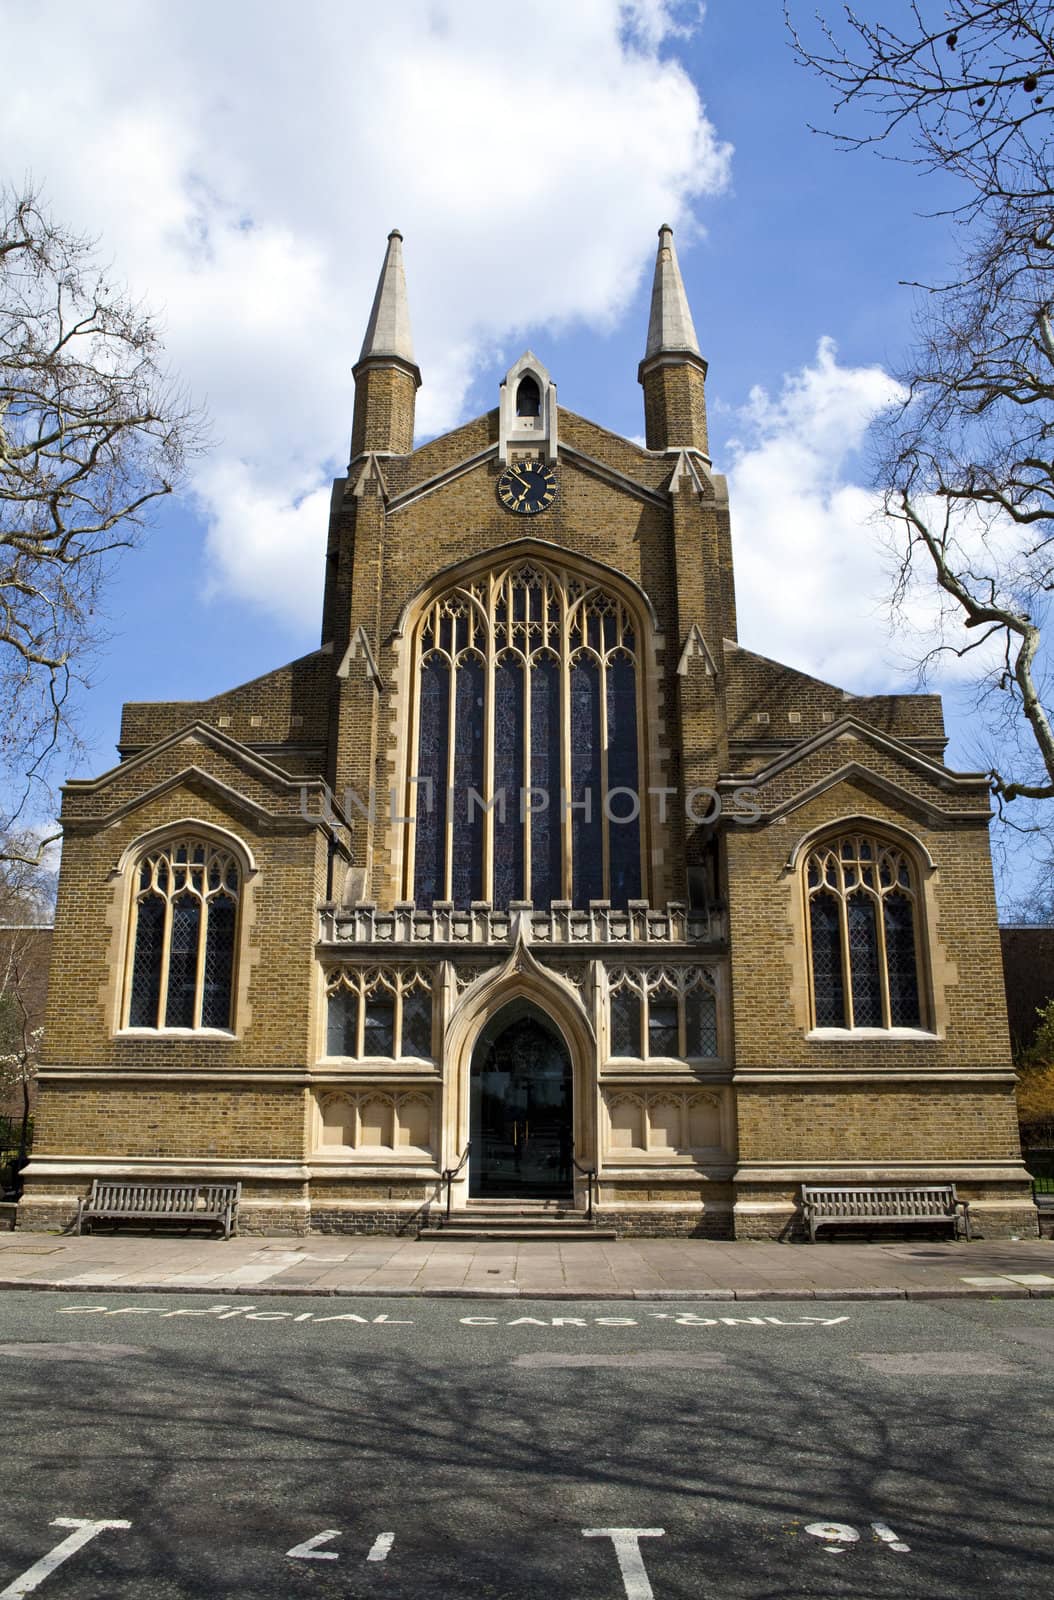 St. John's Church Hyde Park in London by chrisdorney